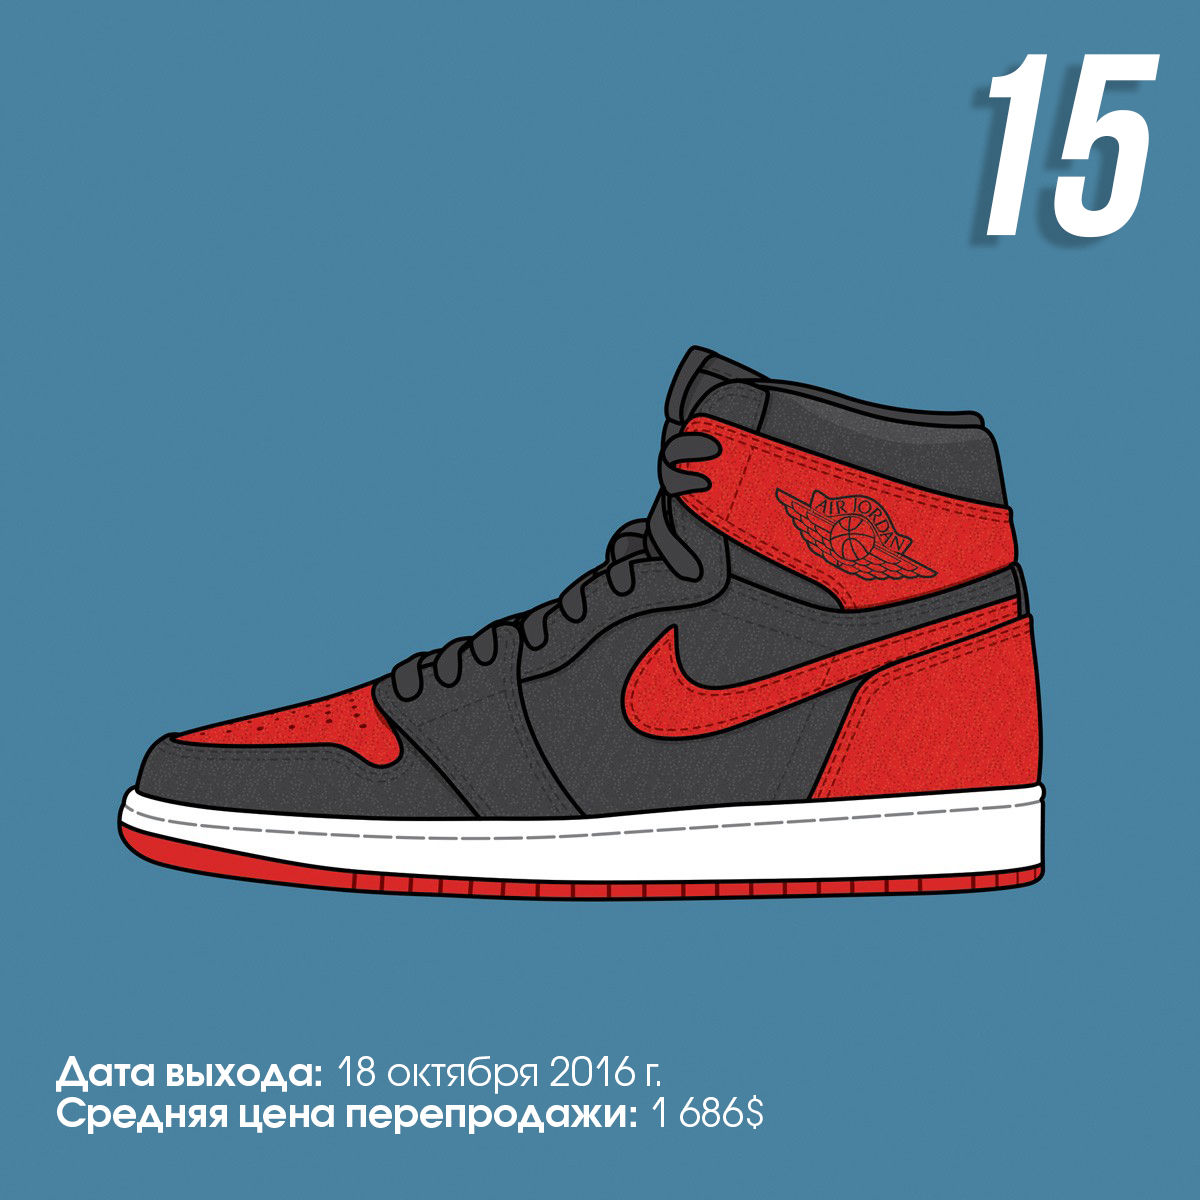 Nike Air Jordan 1 “Igloo”